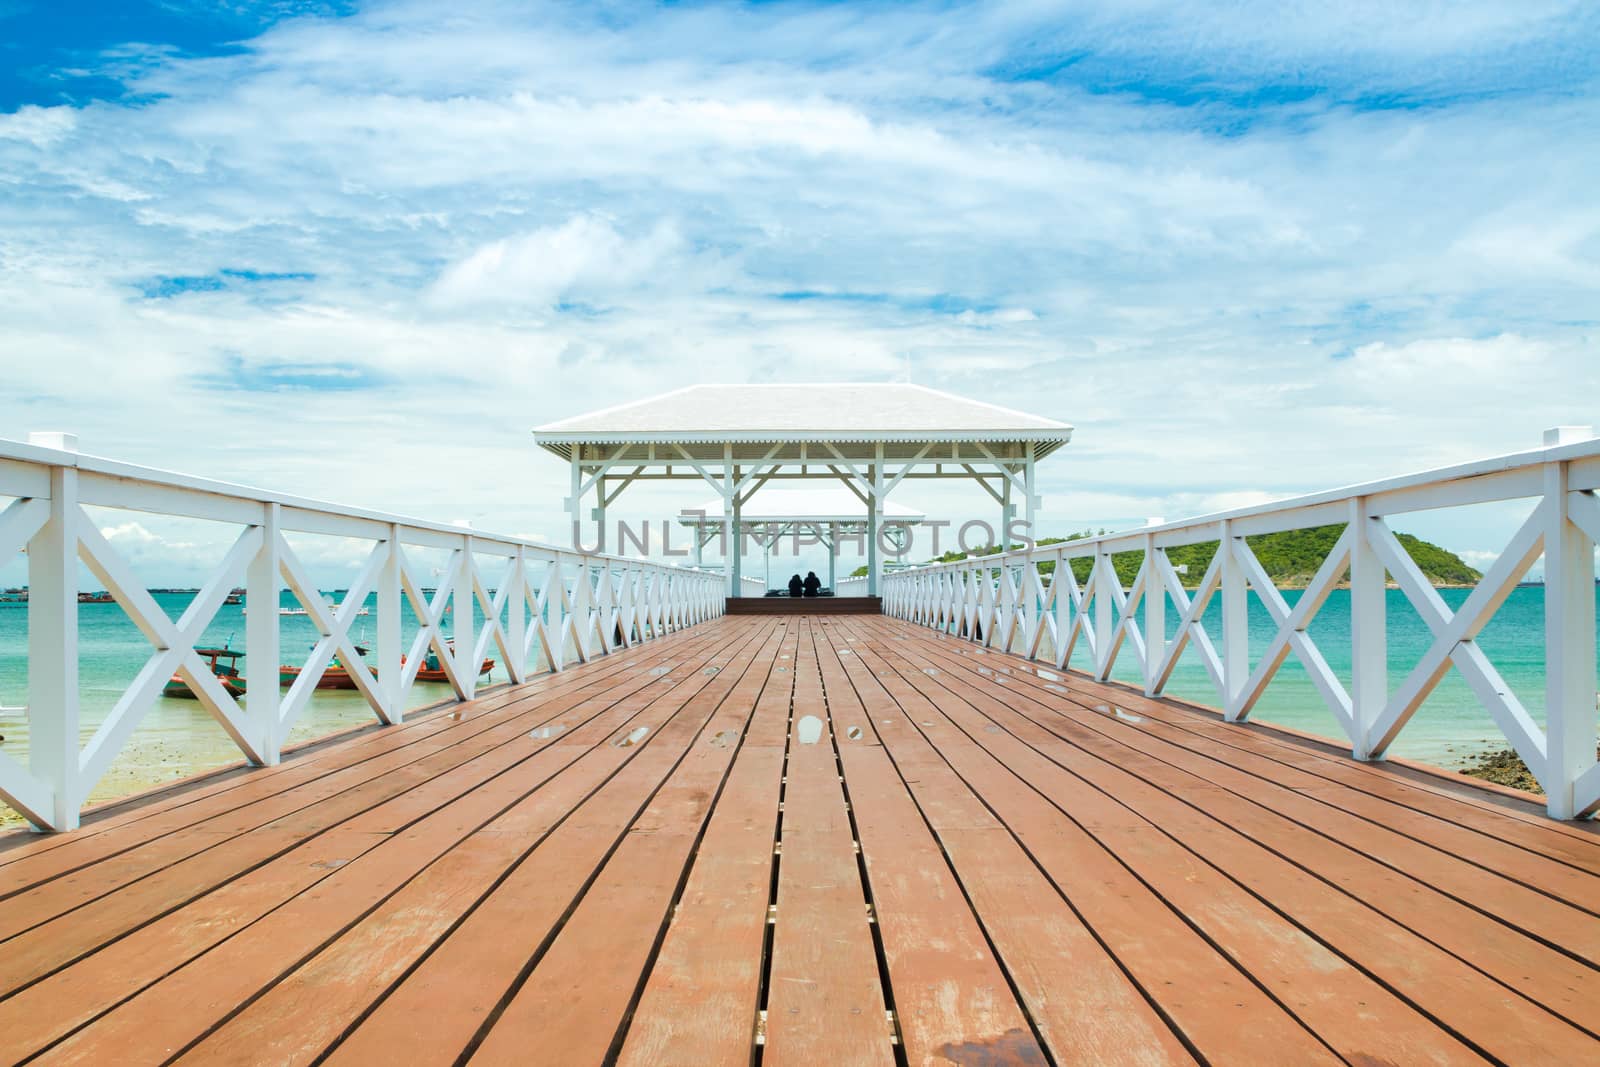 wooden bridge pier in Koh Sri Chang. Chonburi, Thailand